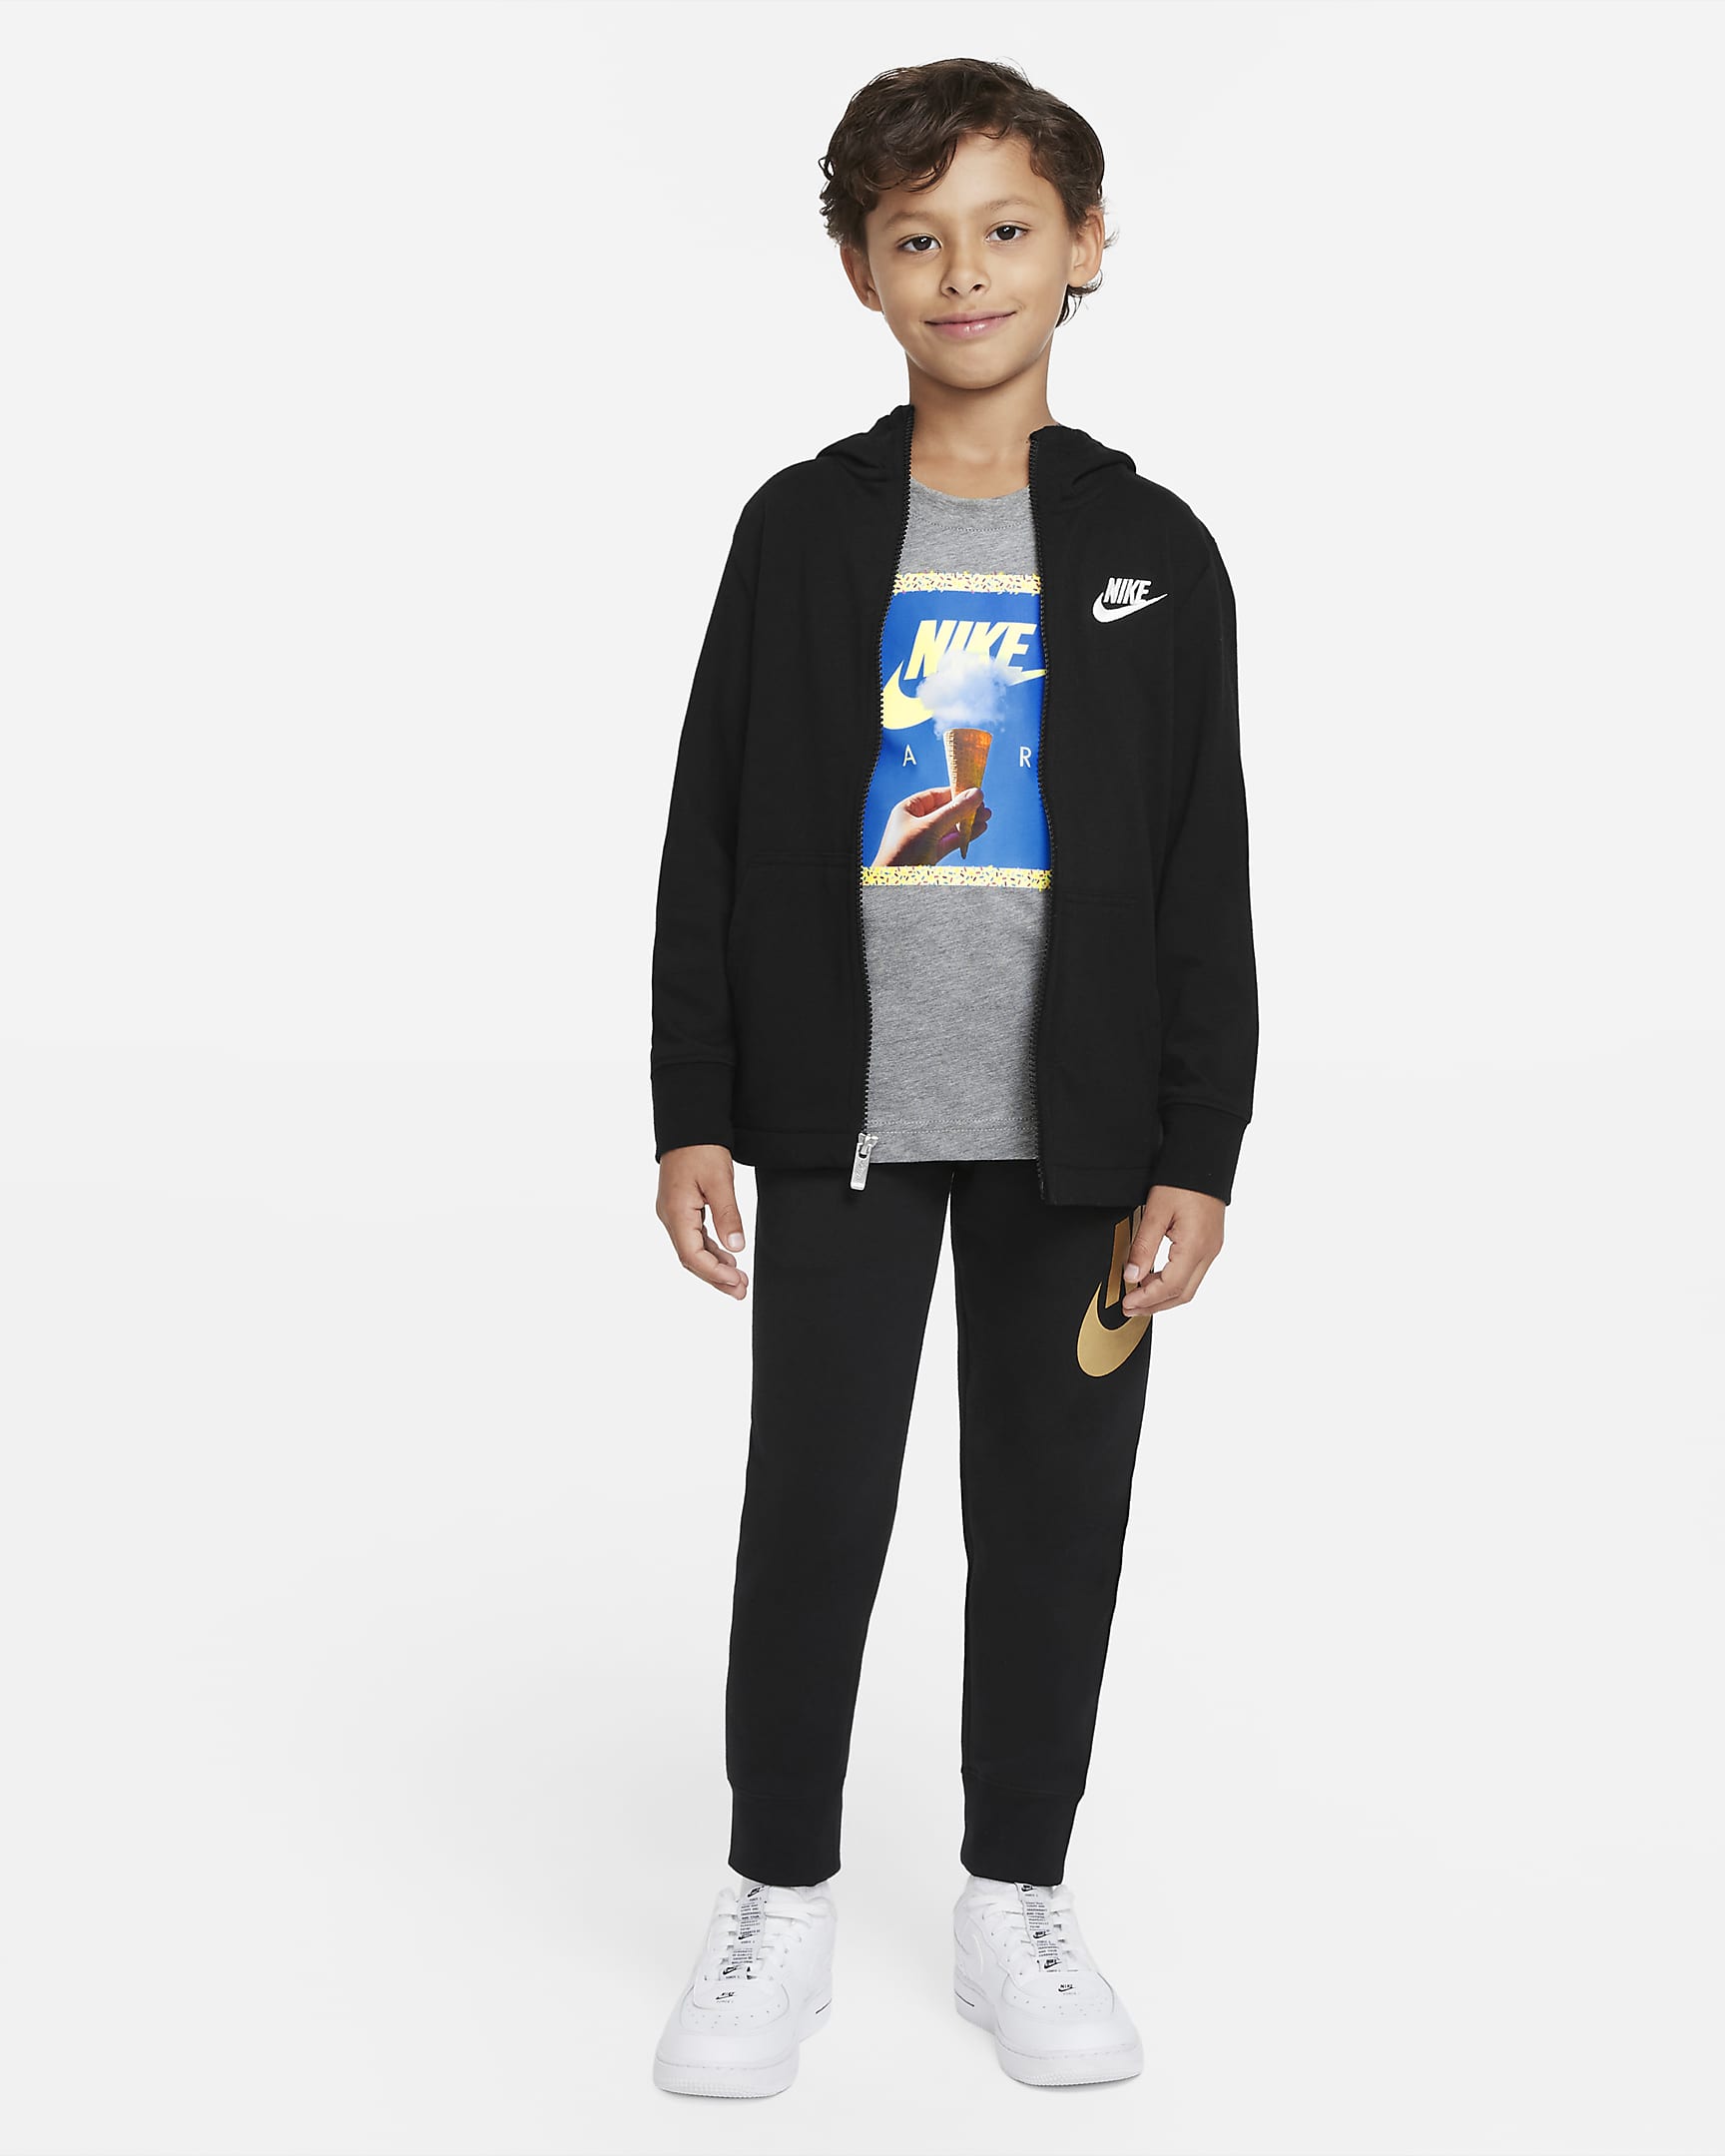 Nike Air Little Kids' T-Shirt. Nike.com